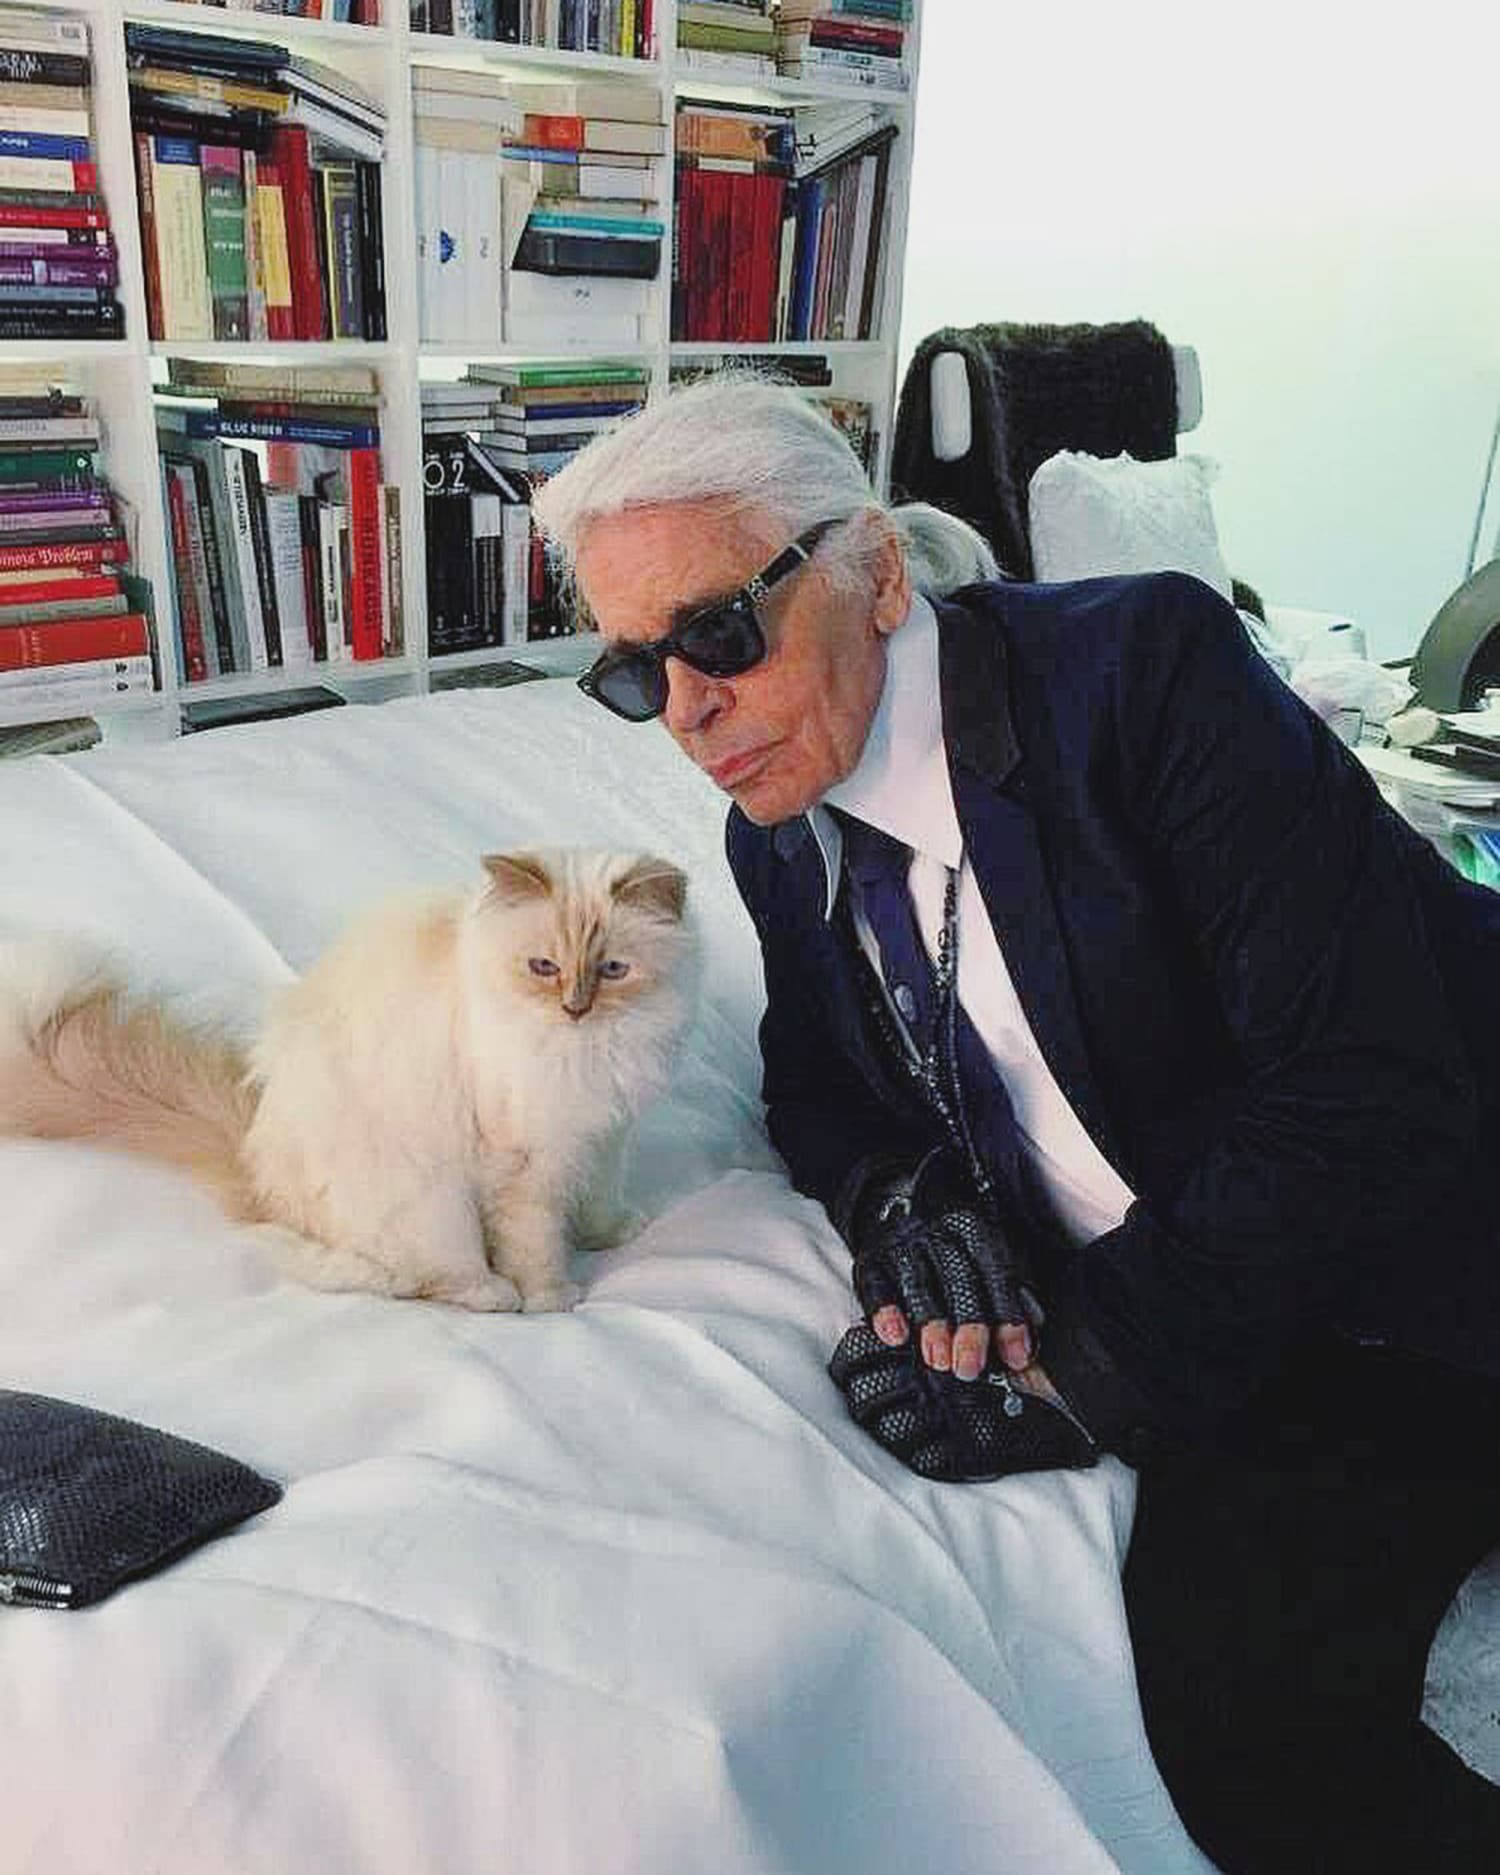 Karl Lagerfeld's cat honoured at Met Gala with feline-inspired outfits